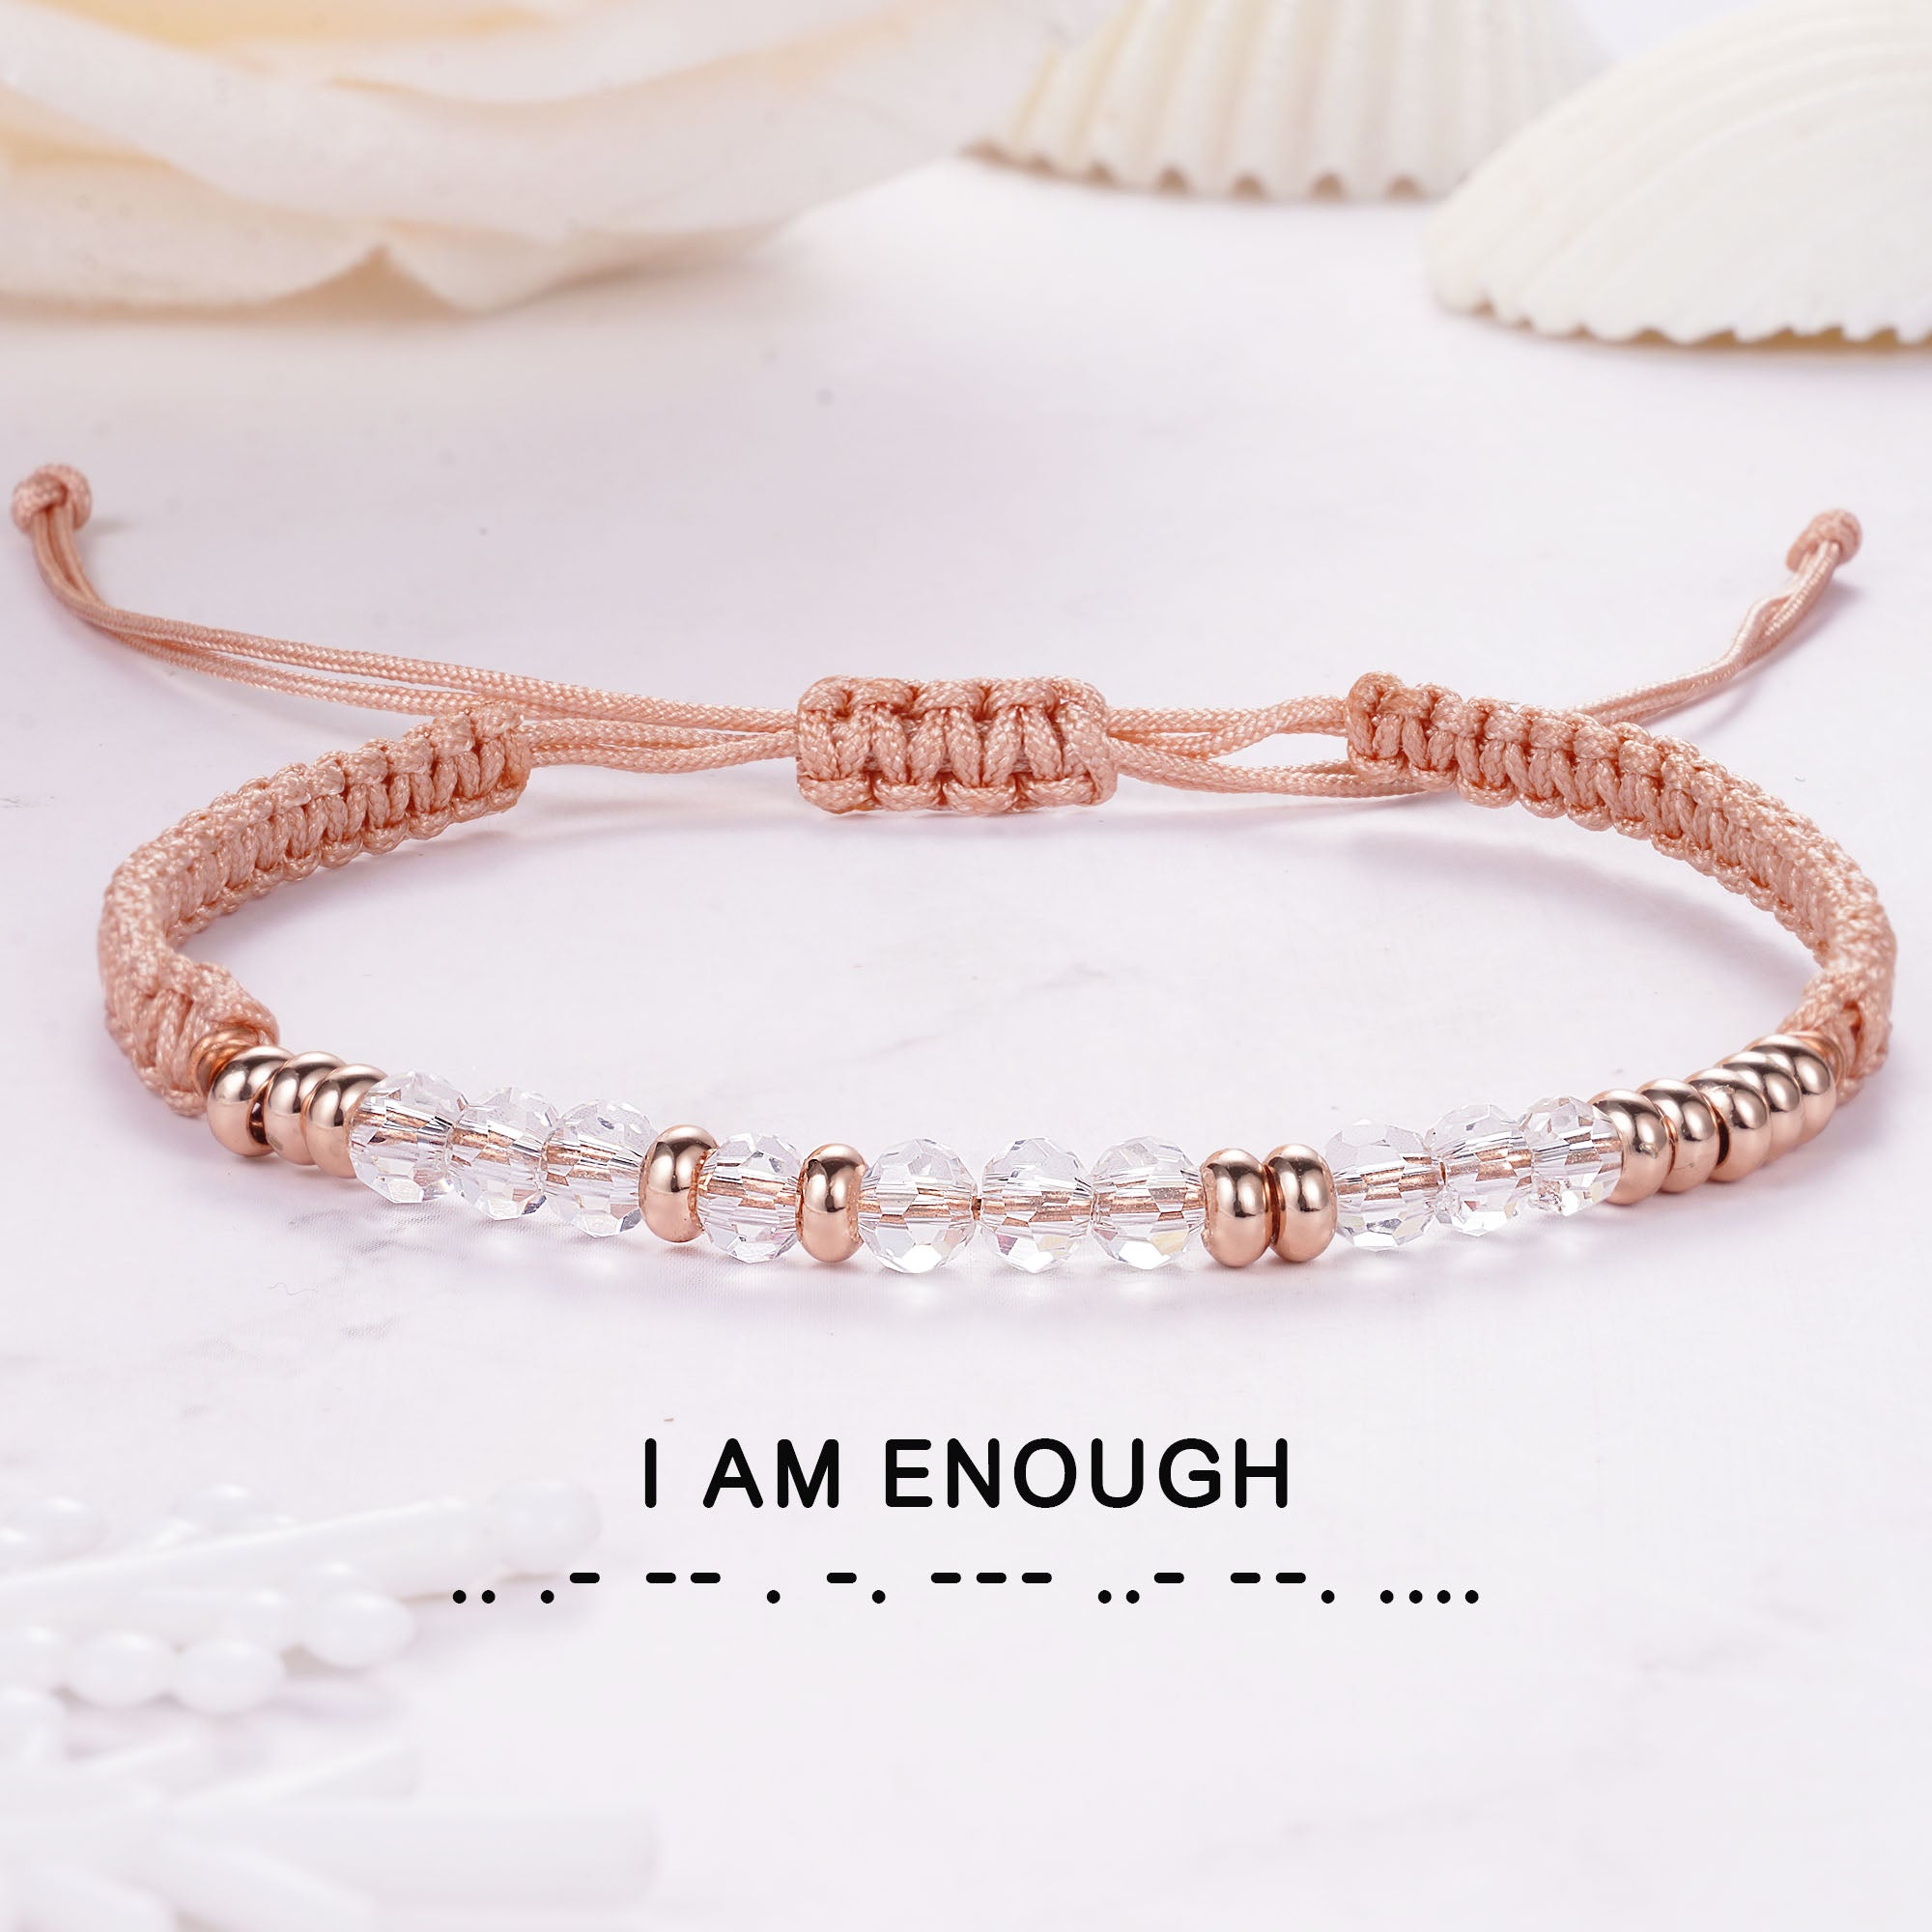 I am Enough